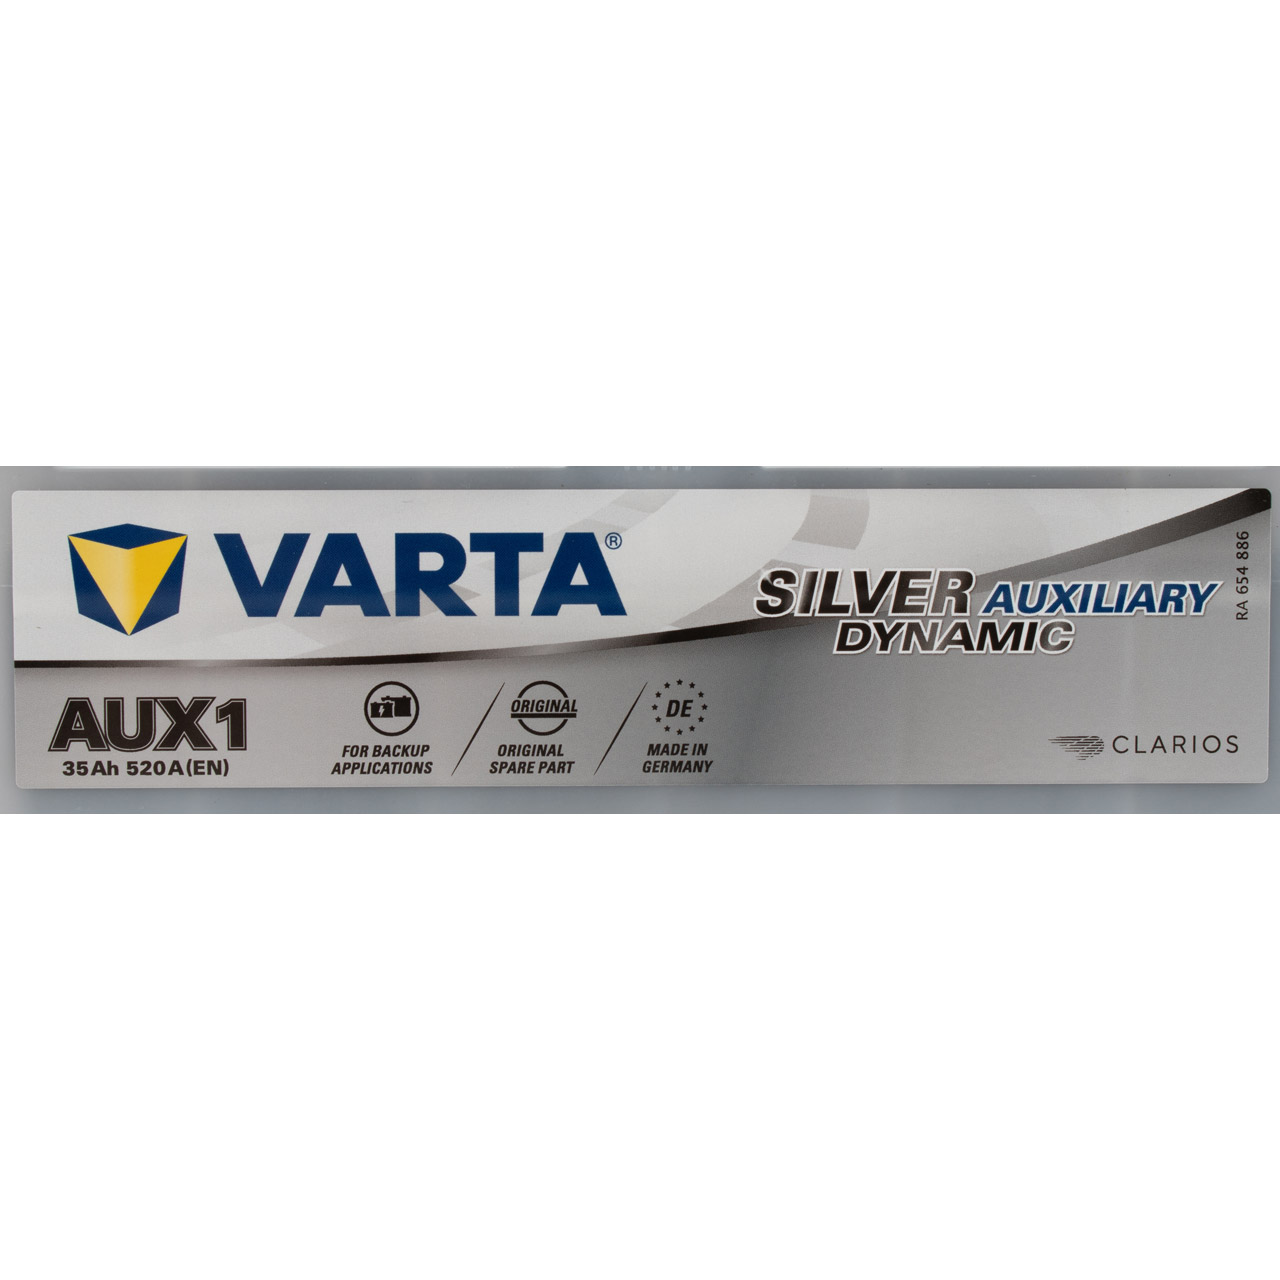 VARTA Aux1 SILVER dynamic AUX Stützbatterie 12V 35Ah EN520A 2305410001